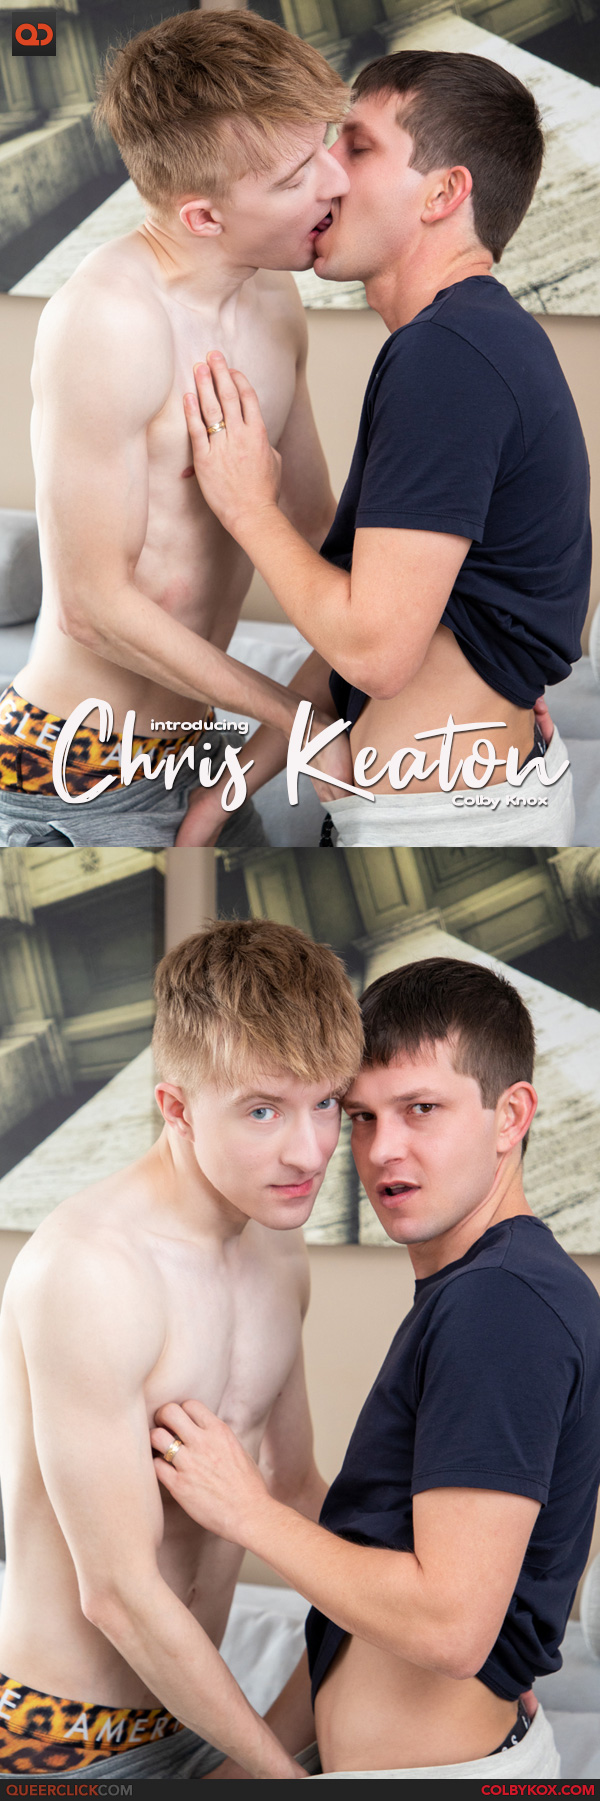 Colby Knox: Chris Keaton